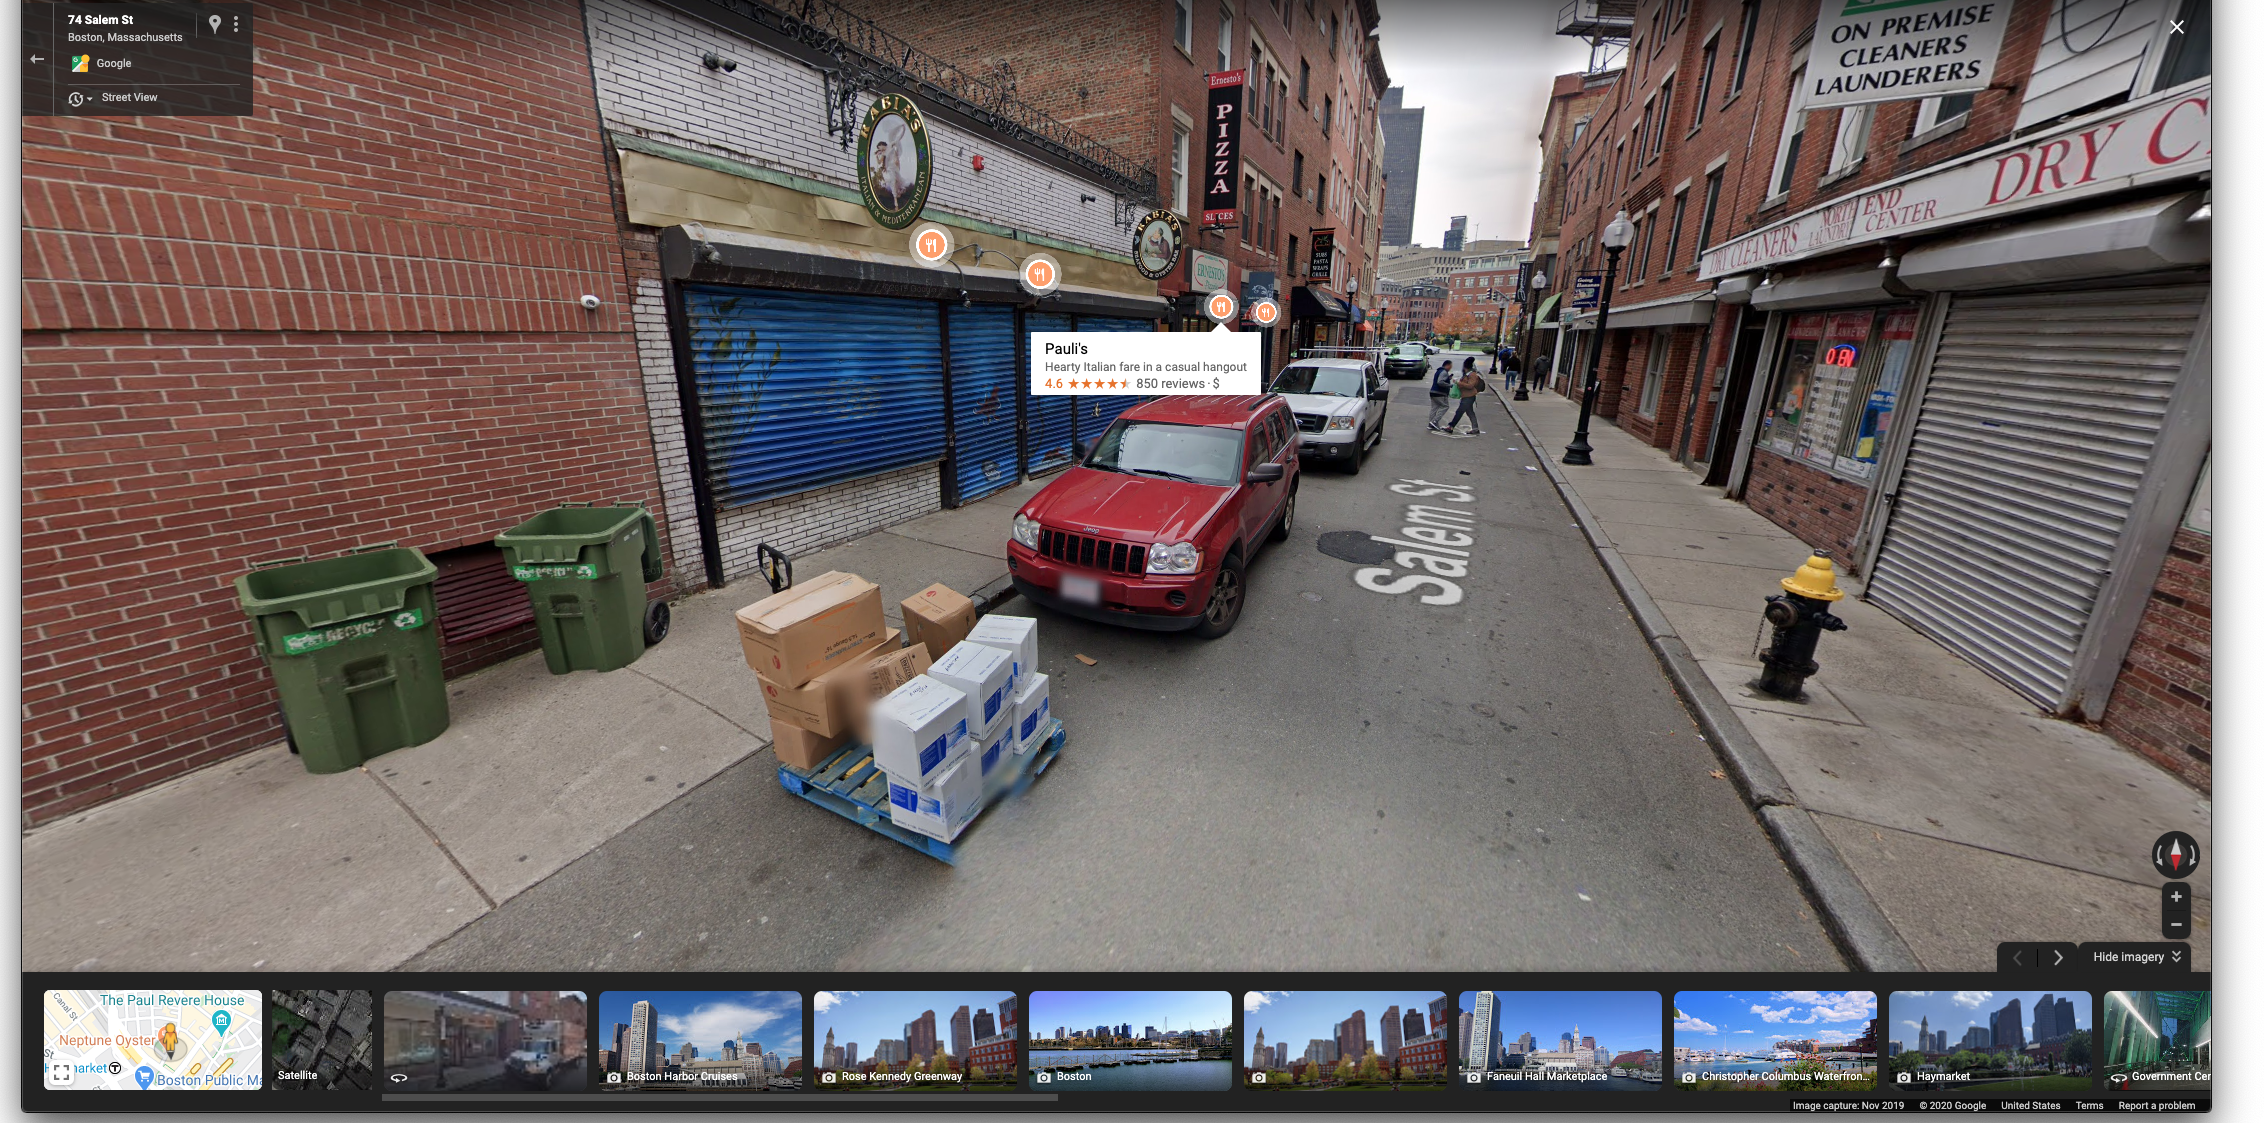 google maps 2015 street view